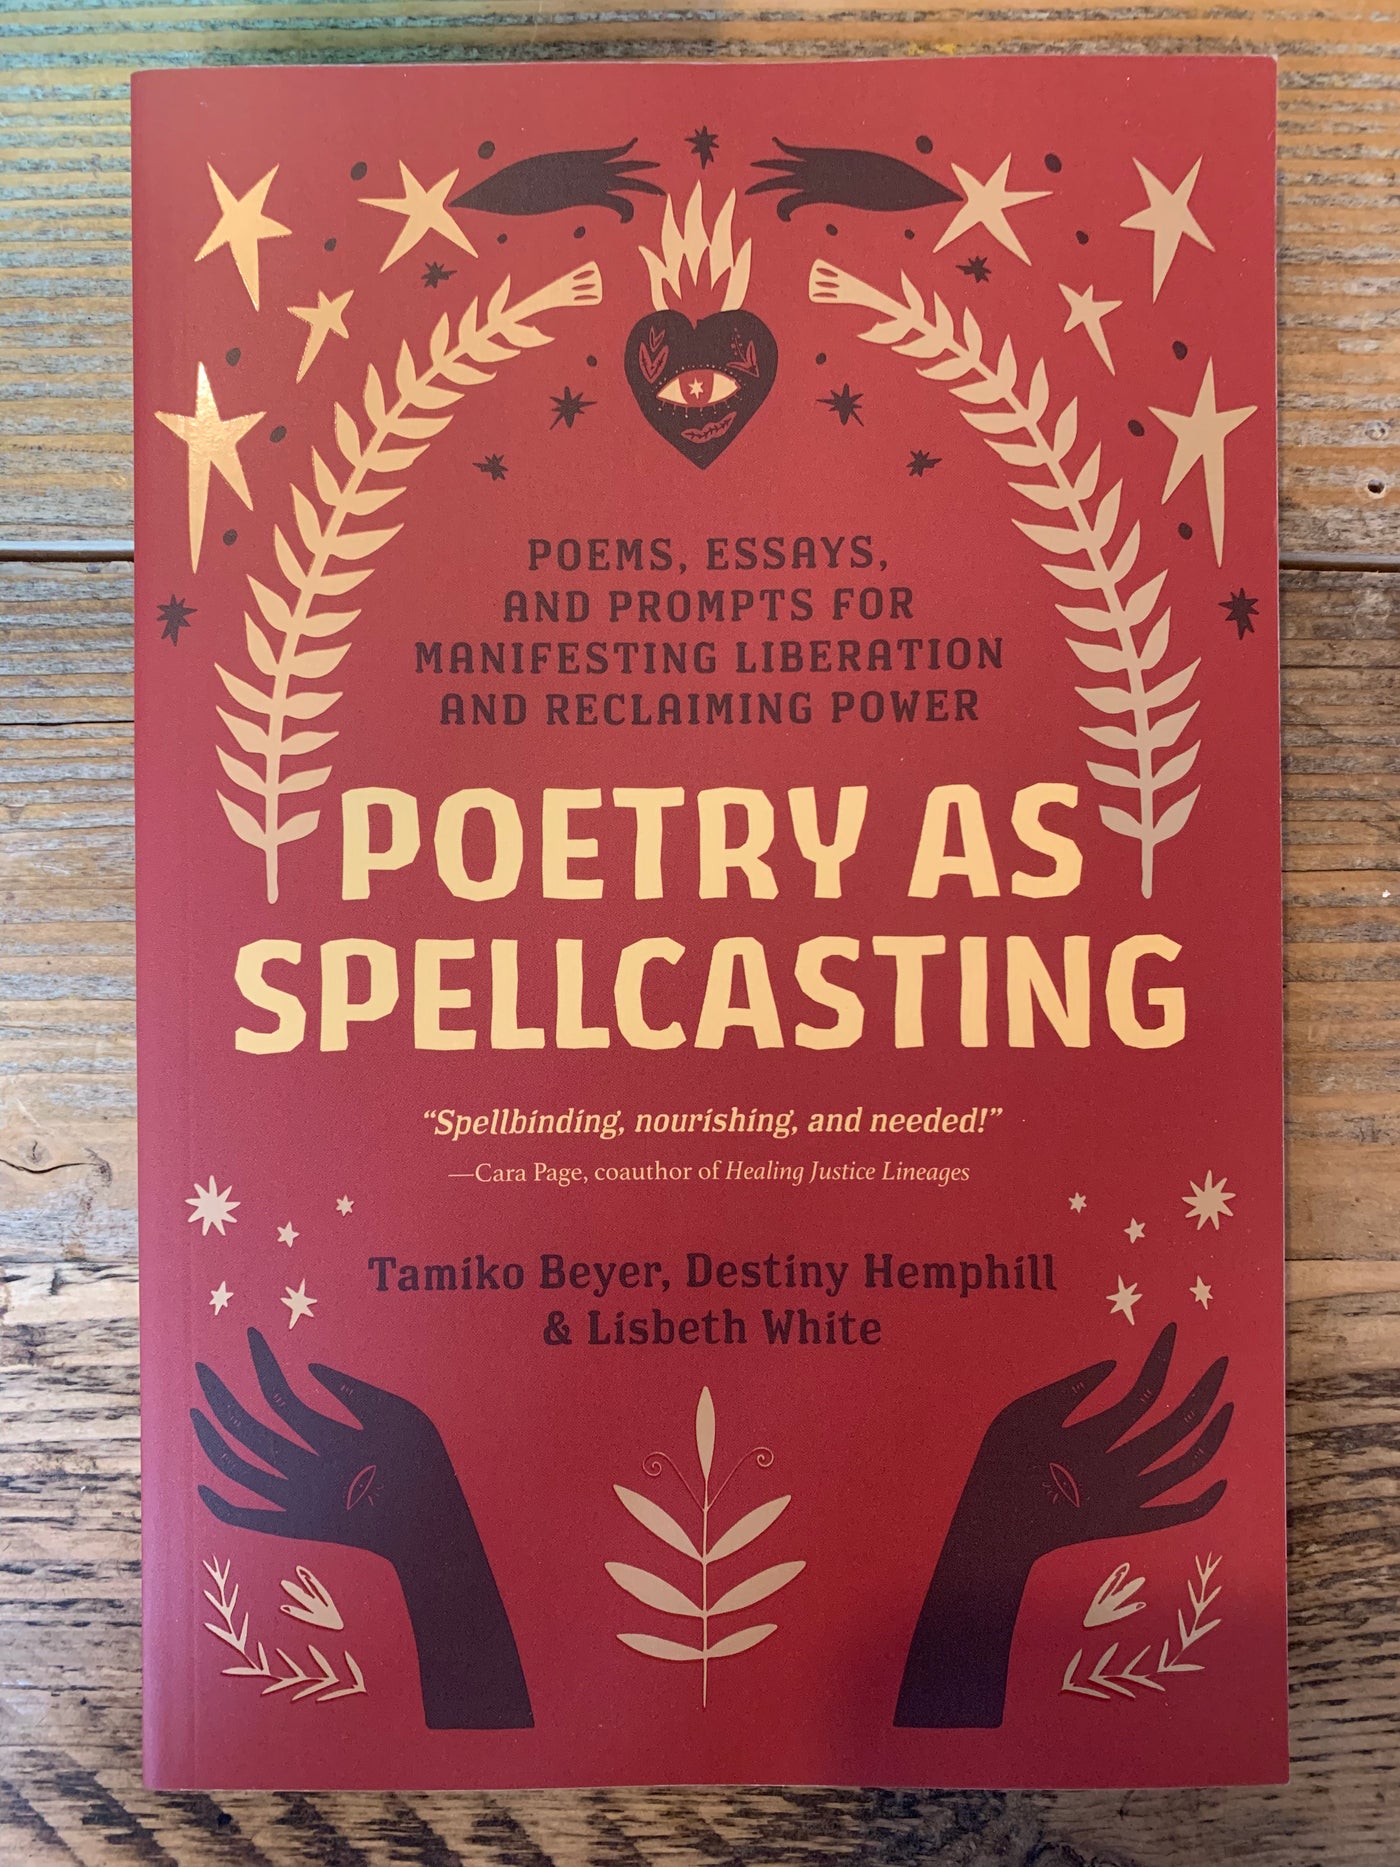 Poetry as Spellcasting